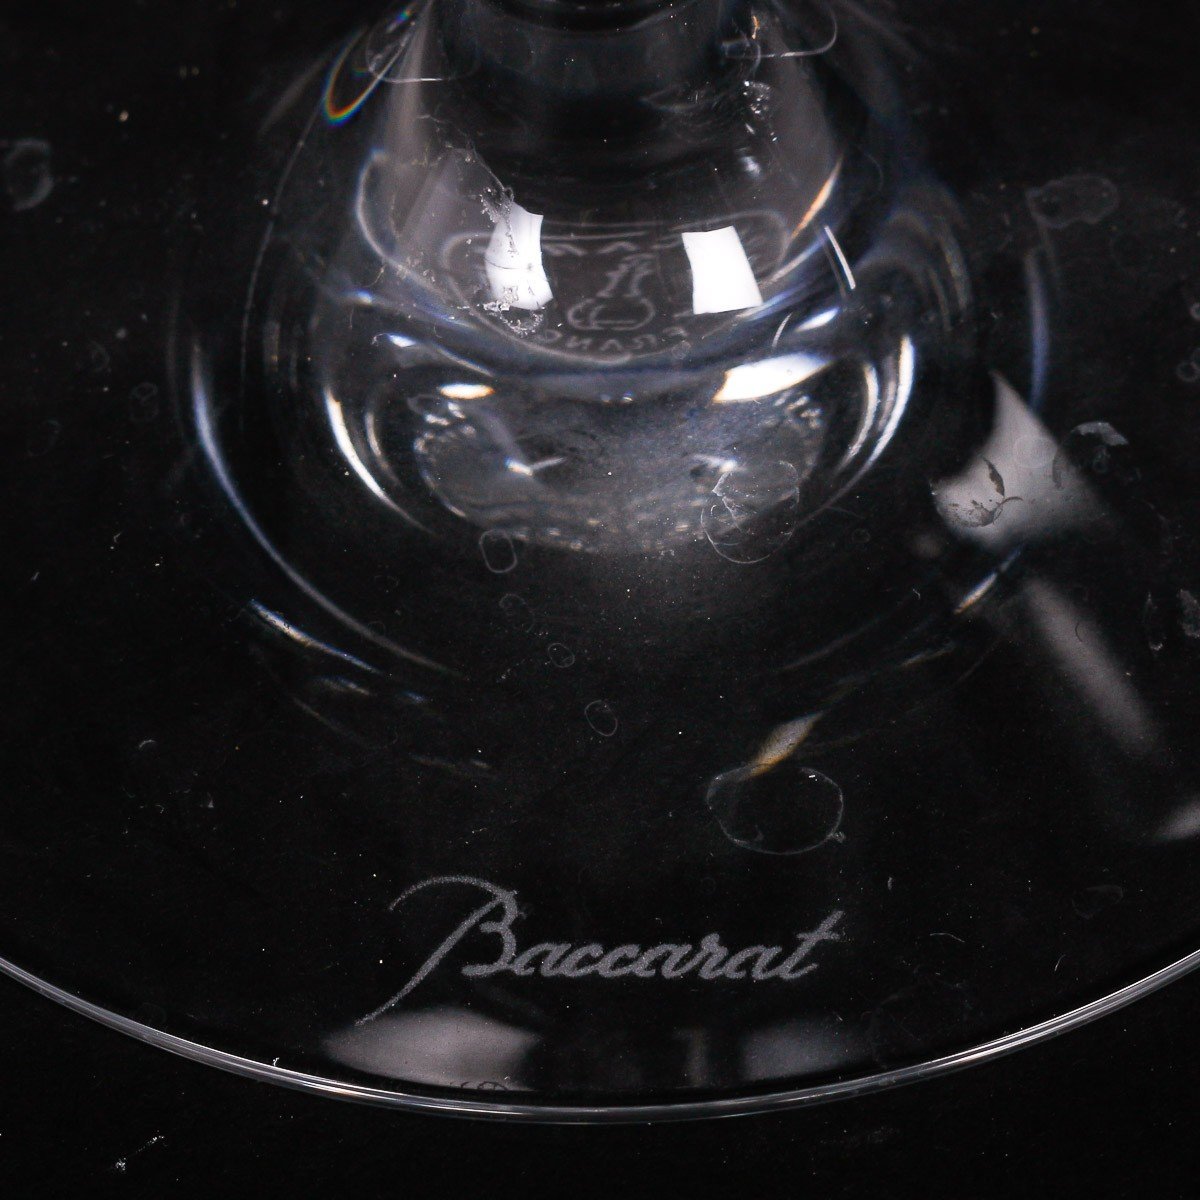 Baccarat Crystal Tasting Glasses, “château” Model-photo-4